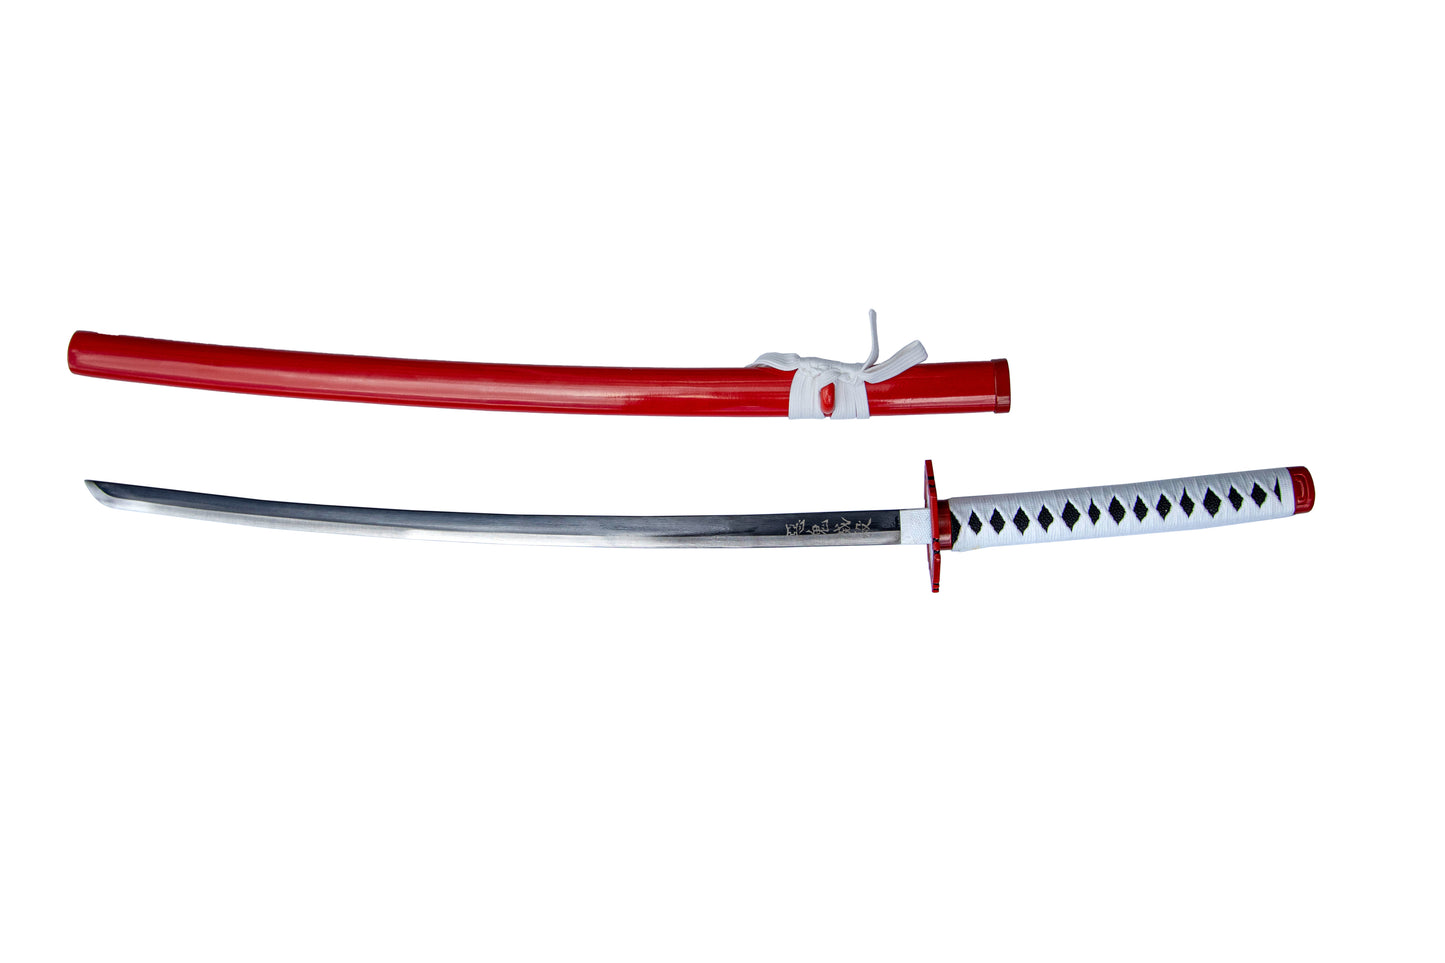 DEMON SLAYER – GIYU TOMIOKA'S NICHIRIN SWORD (w FREE sword stand)